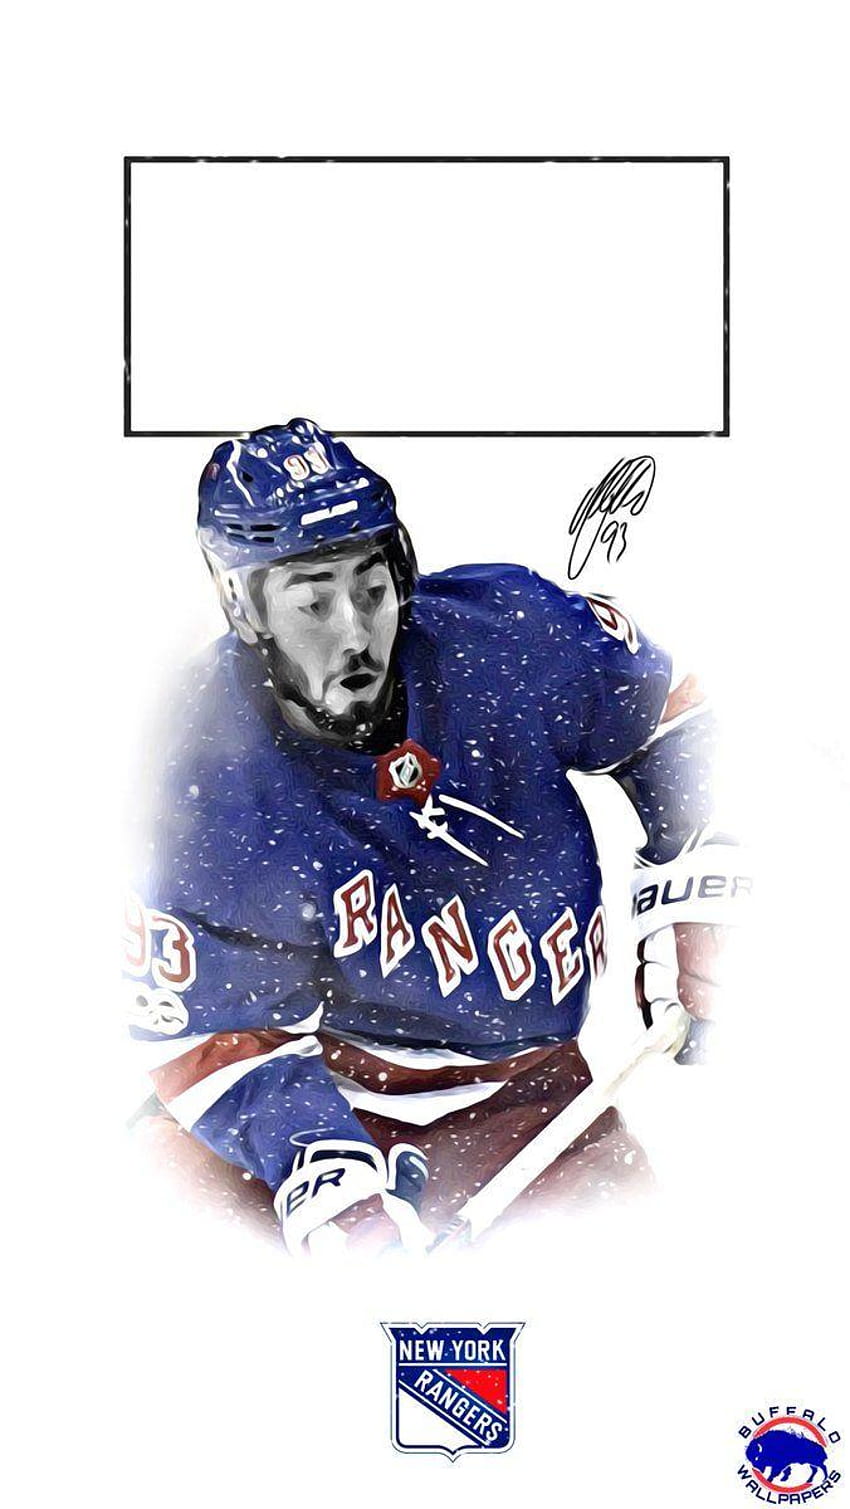 New York Rangers (NHL) iPhone X/XS/XR Lock Screen Wallpaper